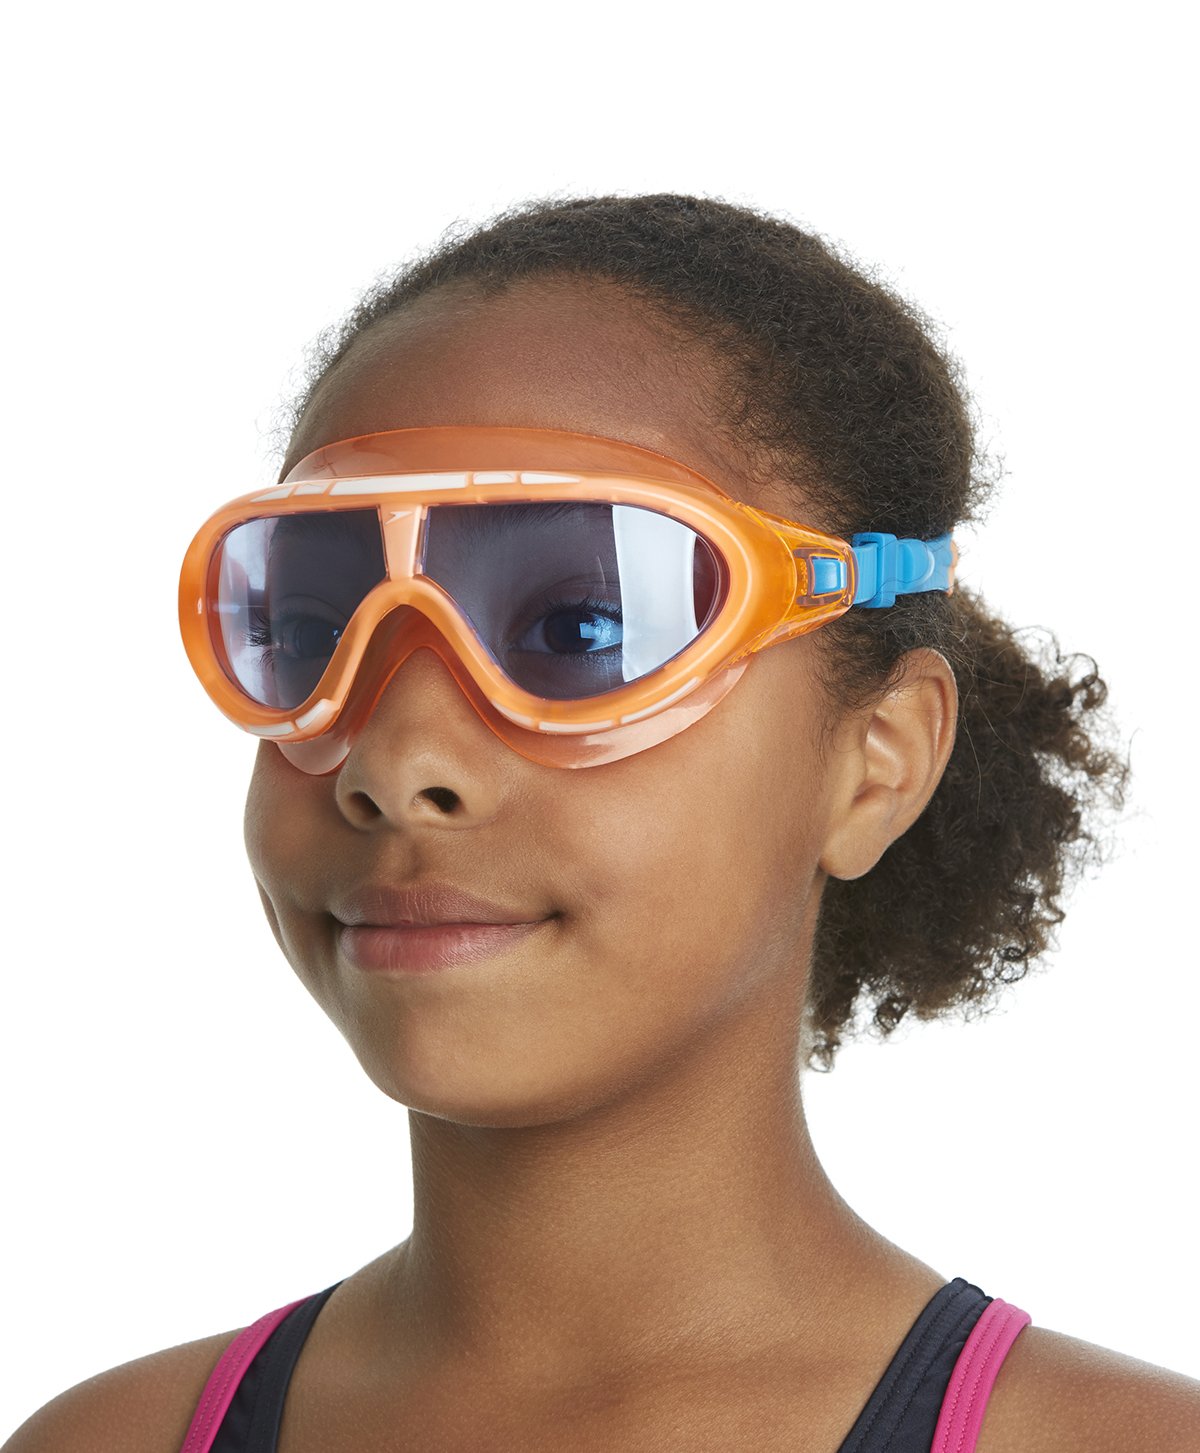 Speedo Unisex - Junior Rift Goggles (Orange/Blue) - Best Price online Prokicksports.com